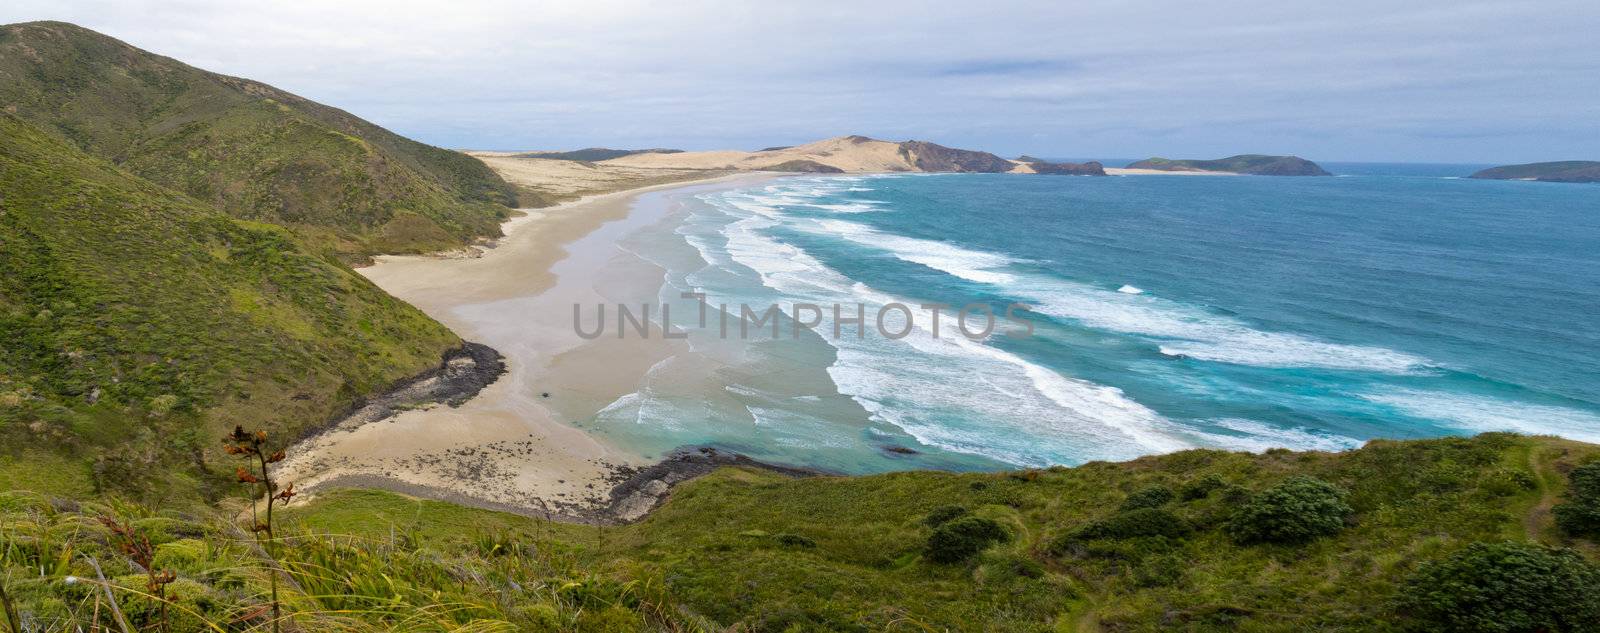 Deserted sand beach coast at Tasman Sea between Cape Reinga and Cape Maria van Diemen at northern tip of North Island of New Zealand